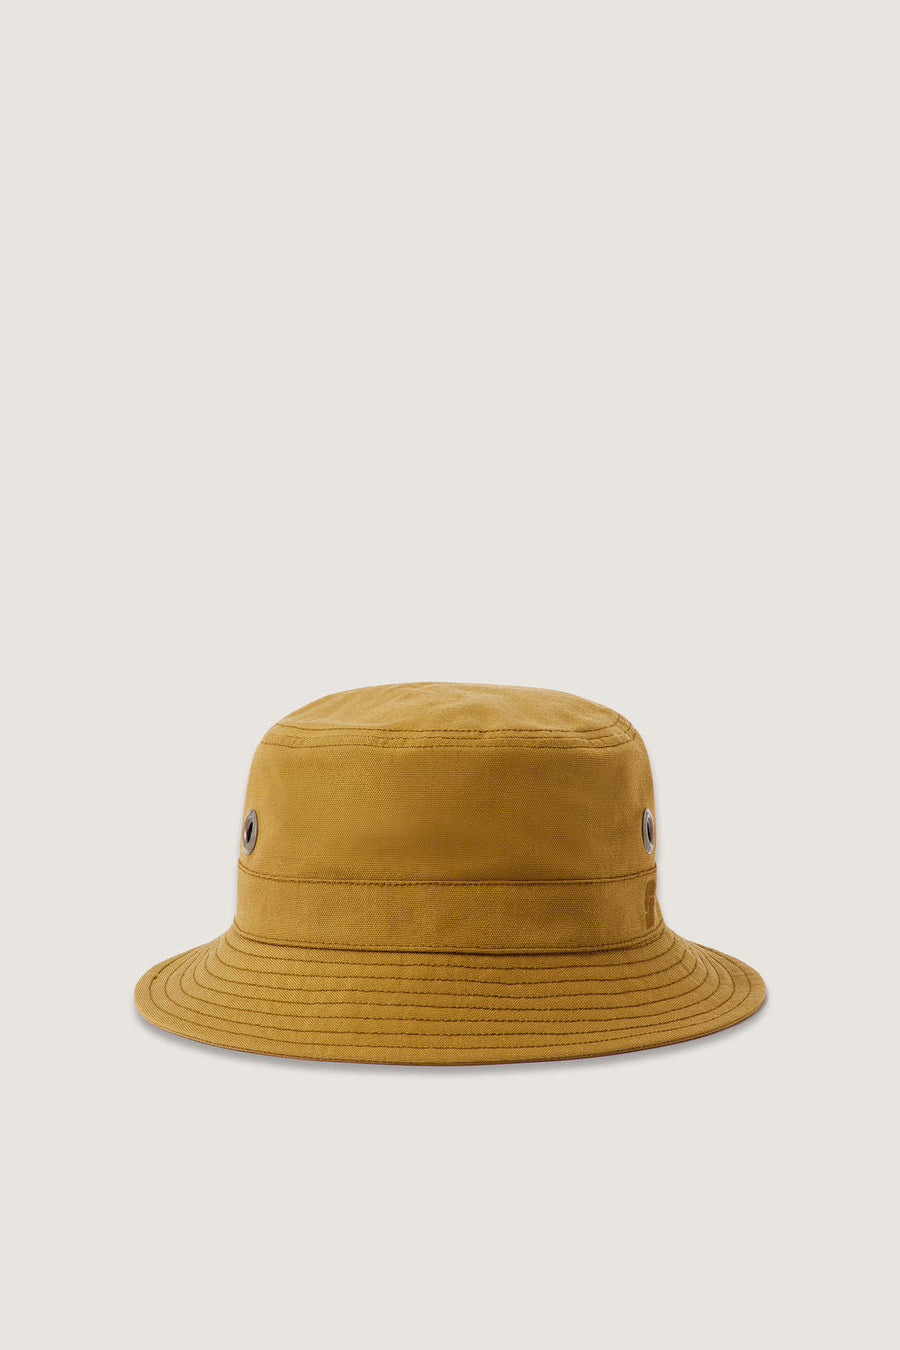 PABLITO BUCKET HAT